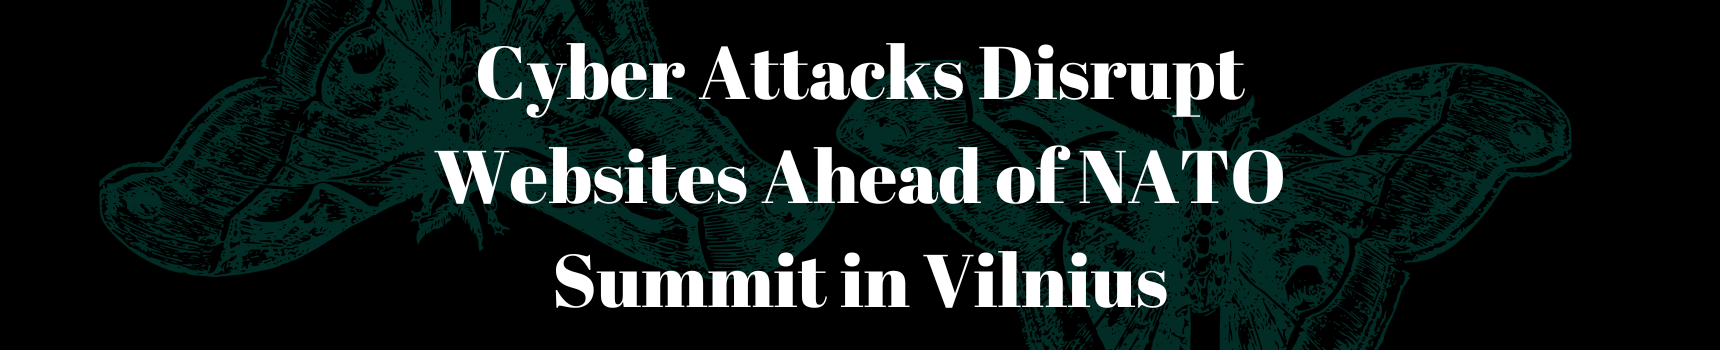 Cyber Attacks Disrupt Websites Ahead of NATO Summit in Vilnius